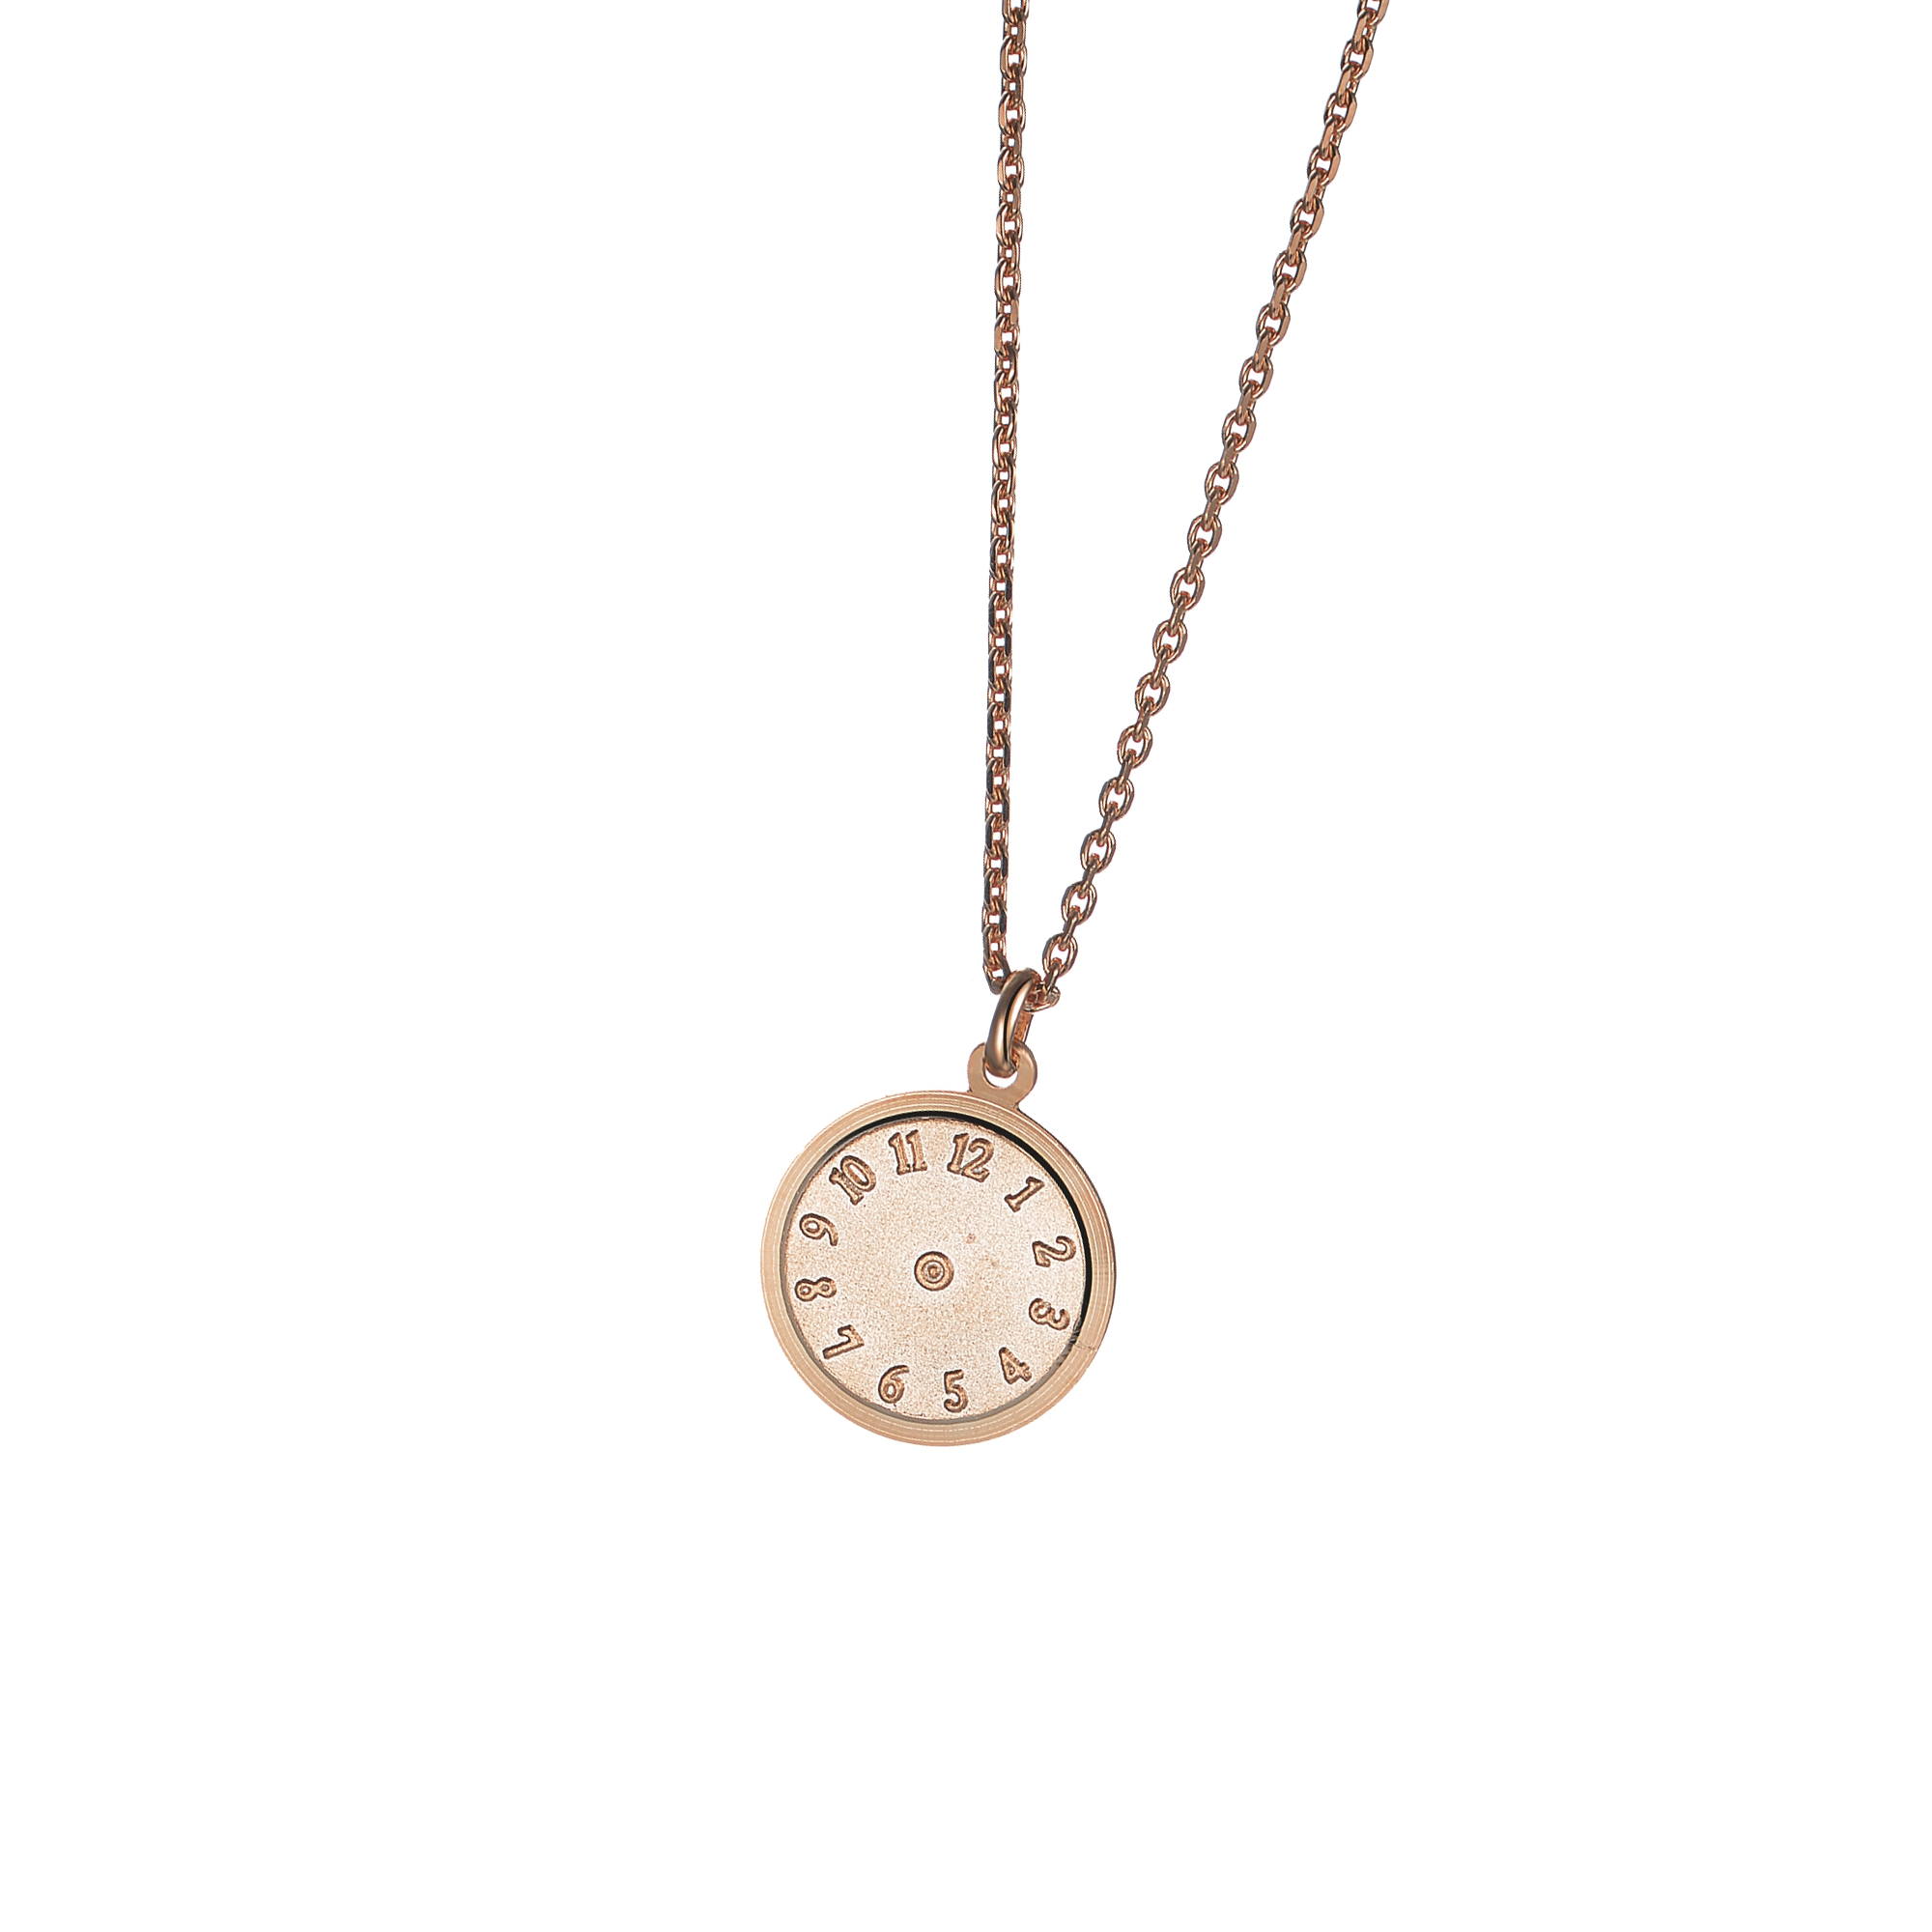 DOOSTI -Damen-Halskette-mit-Anhaenger-Uhr-925-Silber-Rosegold-vergoldetSI-N-66-RG